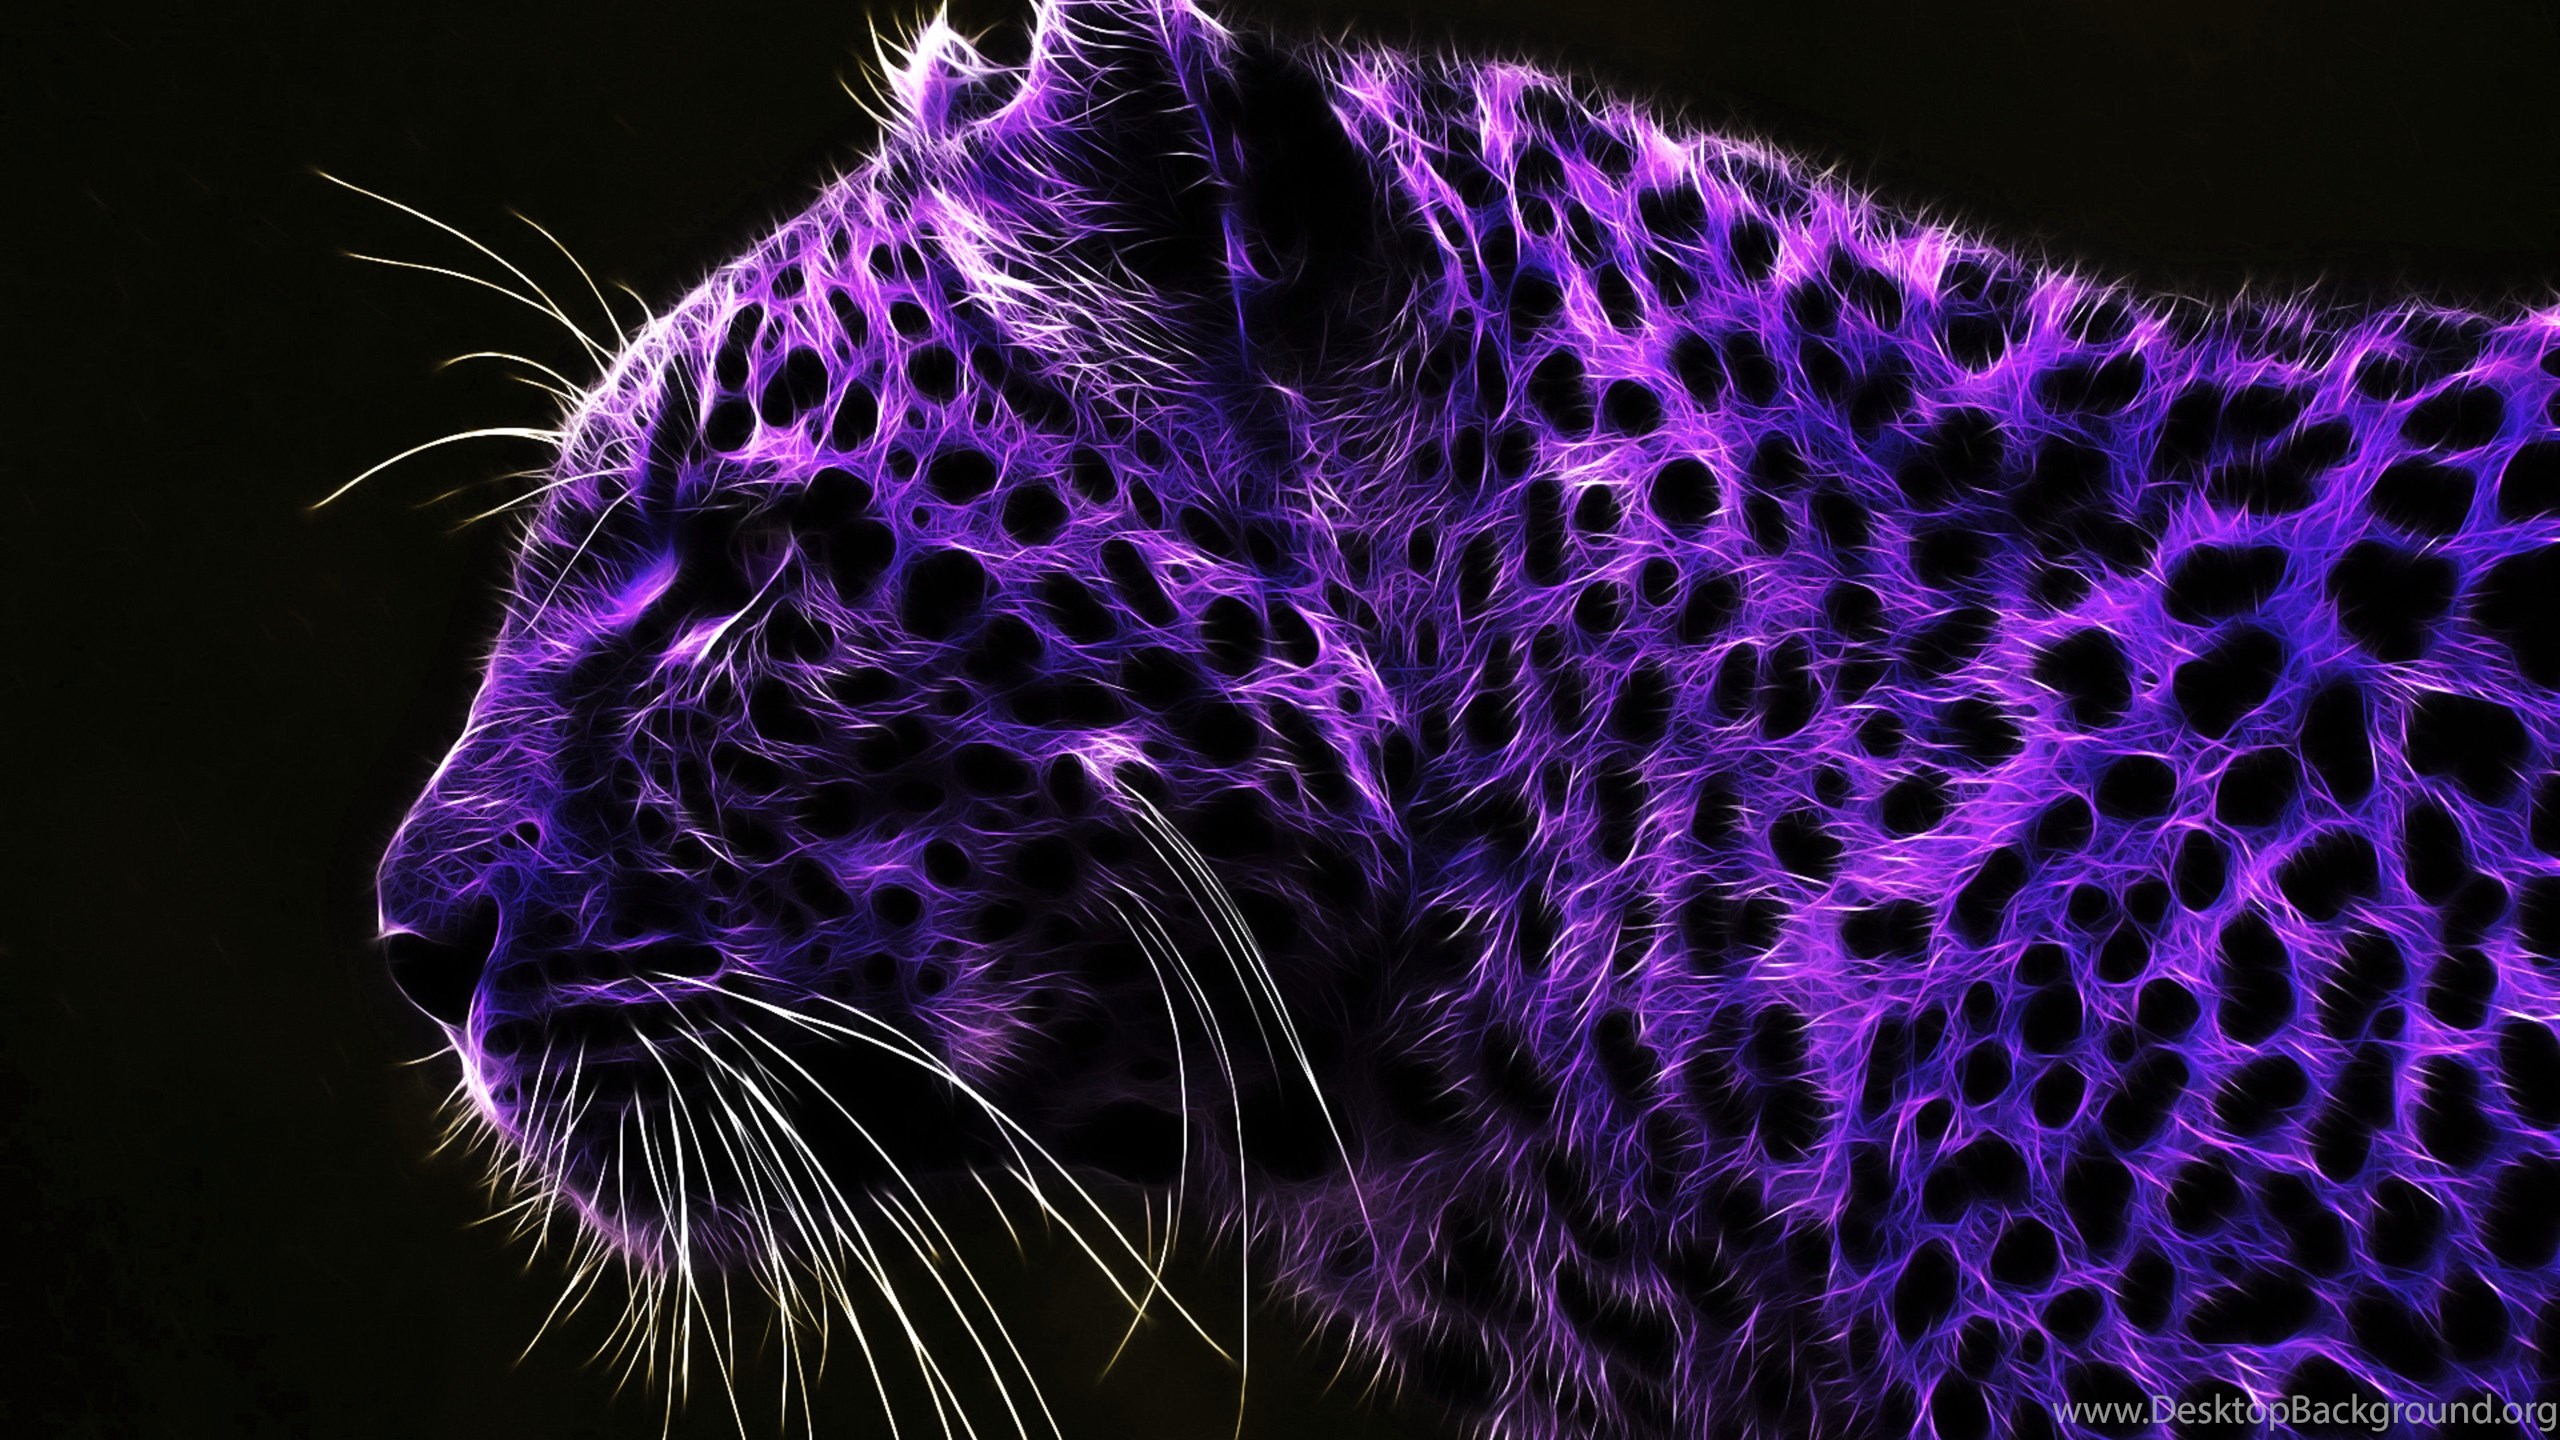 Purple Tiger With Black Dots Artistic Wallpaper Desktop Background